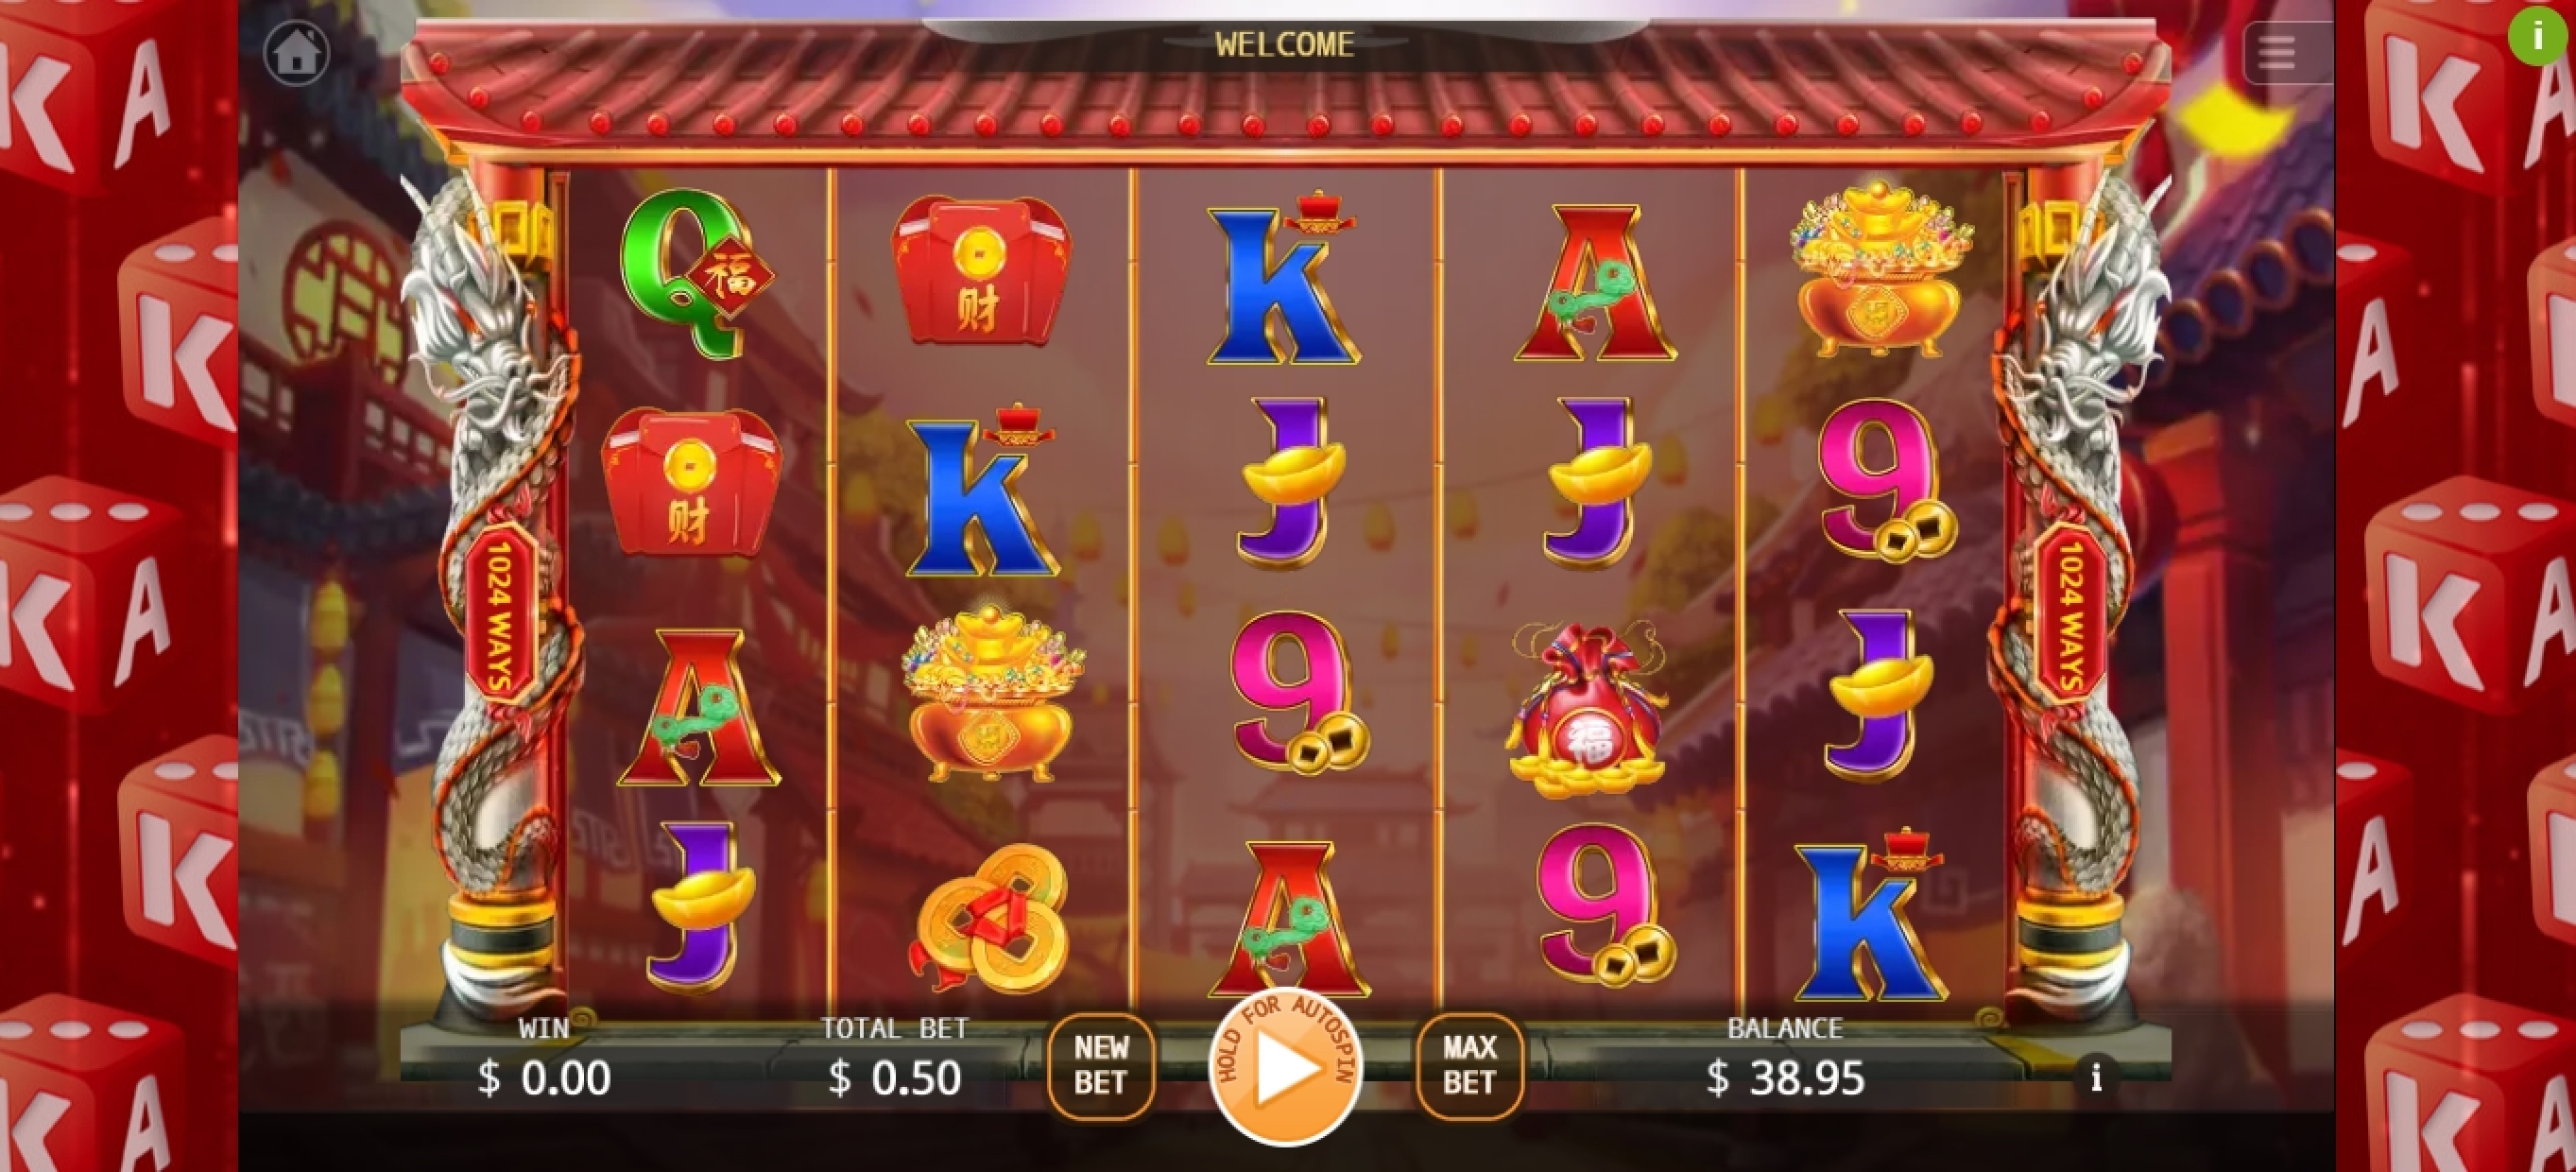 Reels in Cai Yuan Guang Jin Slot Game by KA Gaming